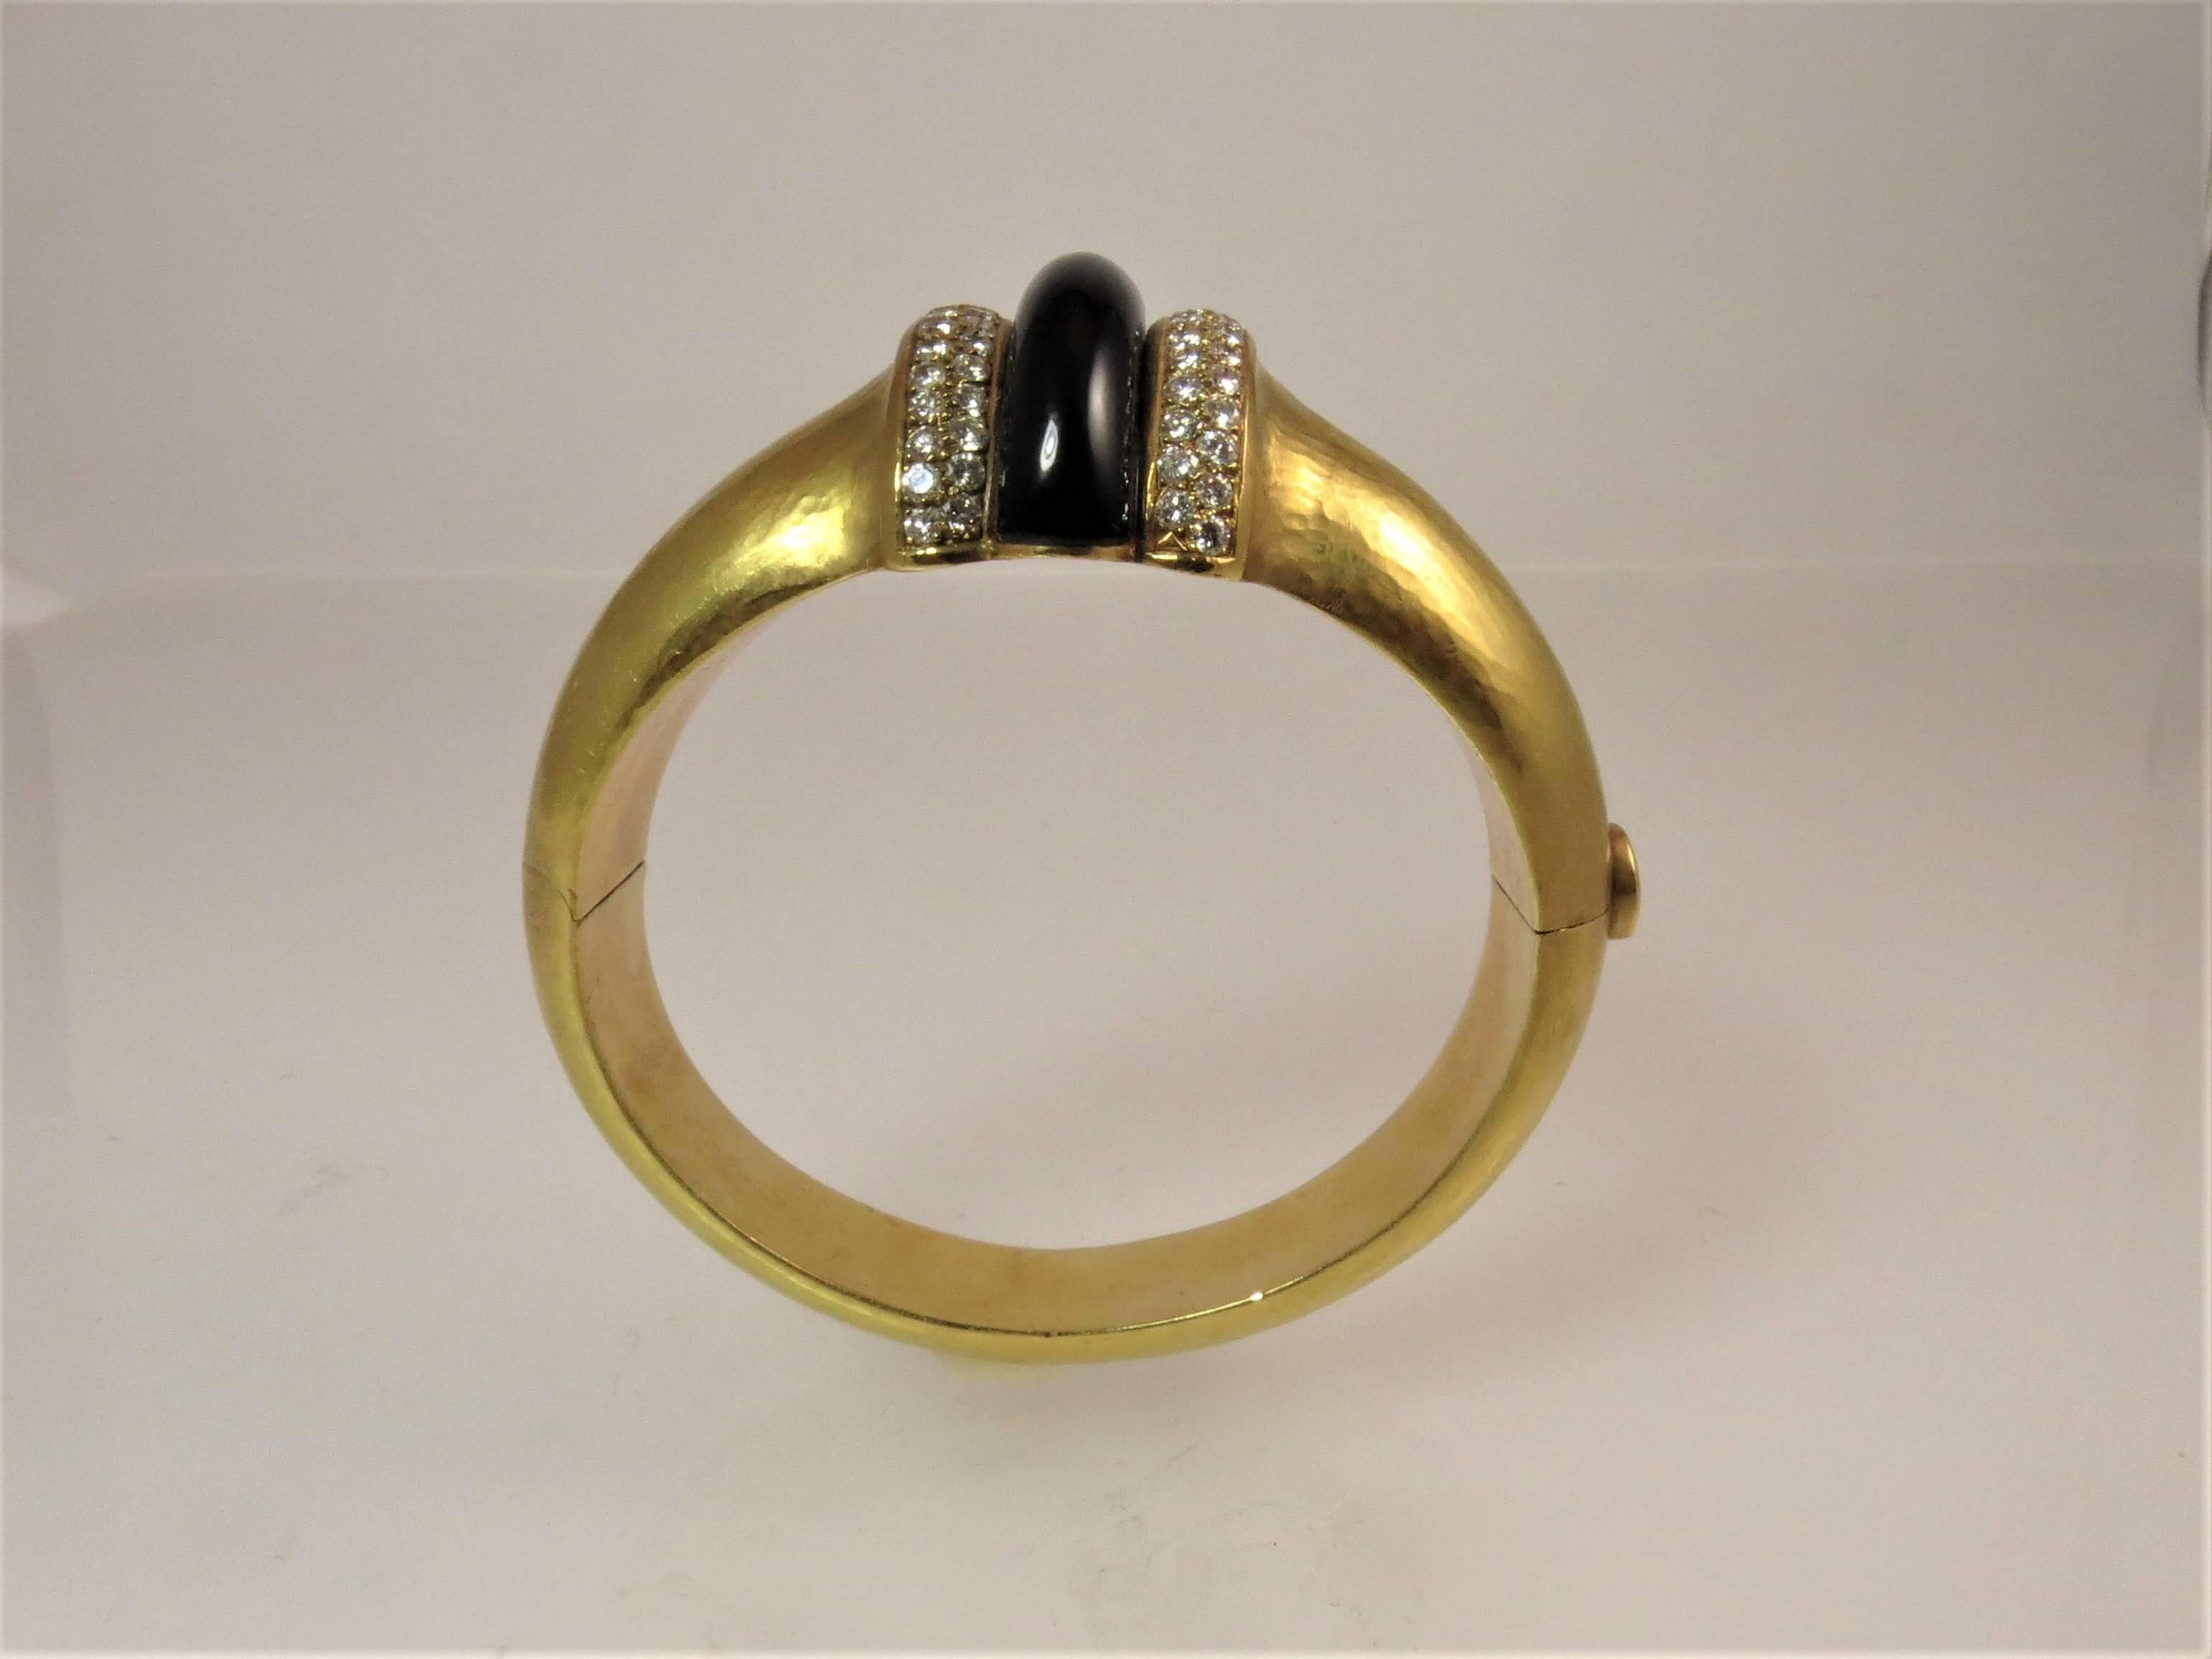 Vendorafa 18K yellow gold and diamond bangle bracelet, set with black onyx and 70 full cut round diamonds weighing 3.96 diamonds, GH color, VS color, weighing 80.60 grams.